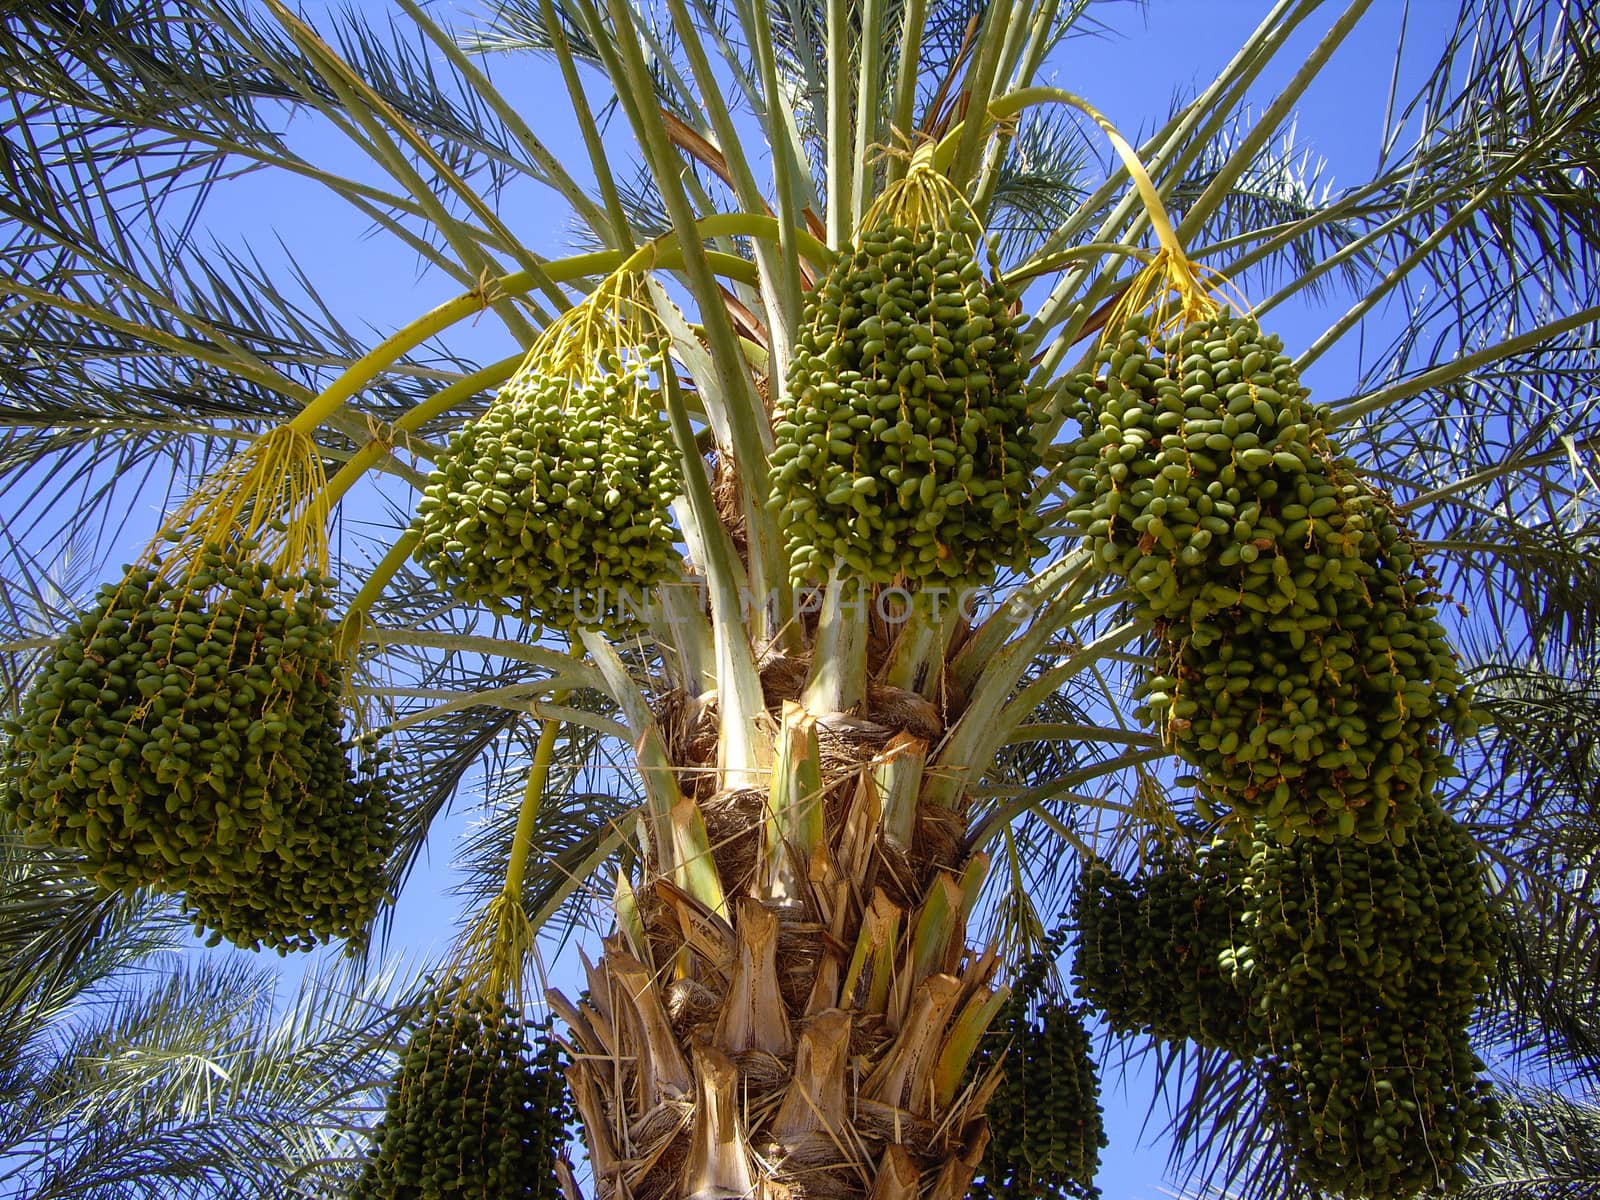 Ripe dates on palm tree by emattil